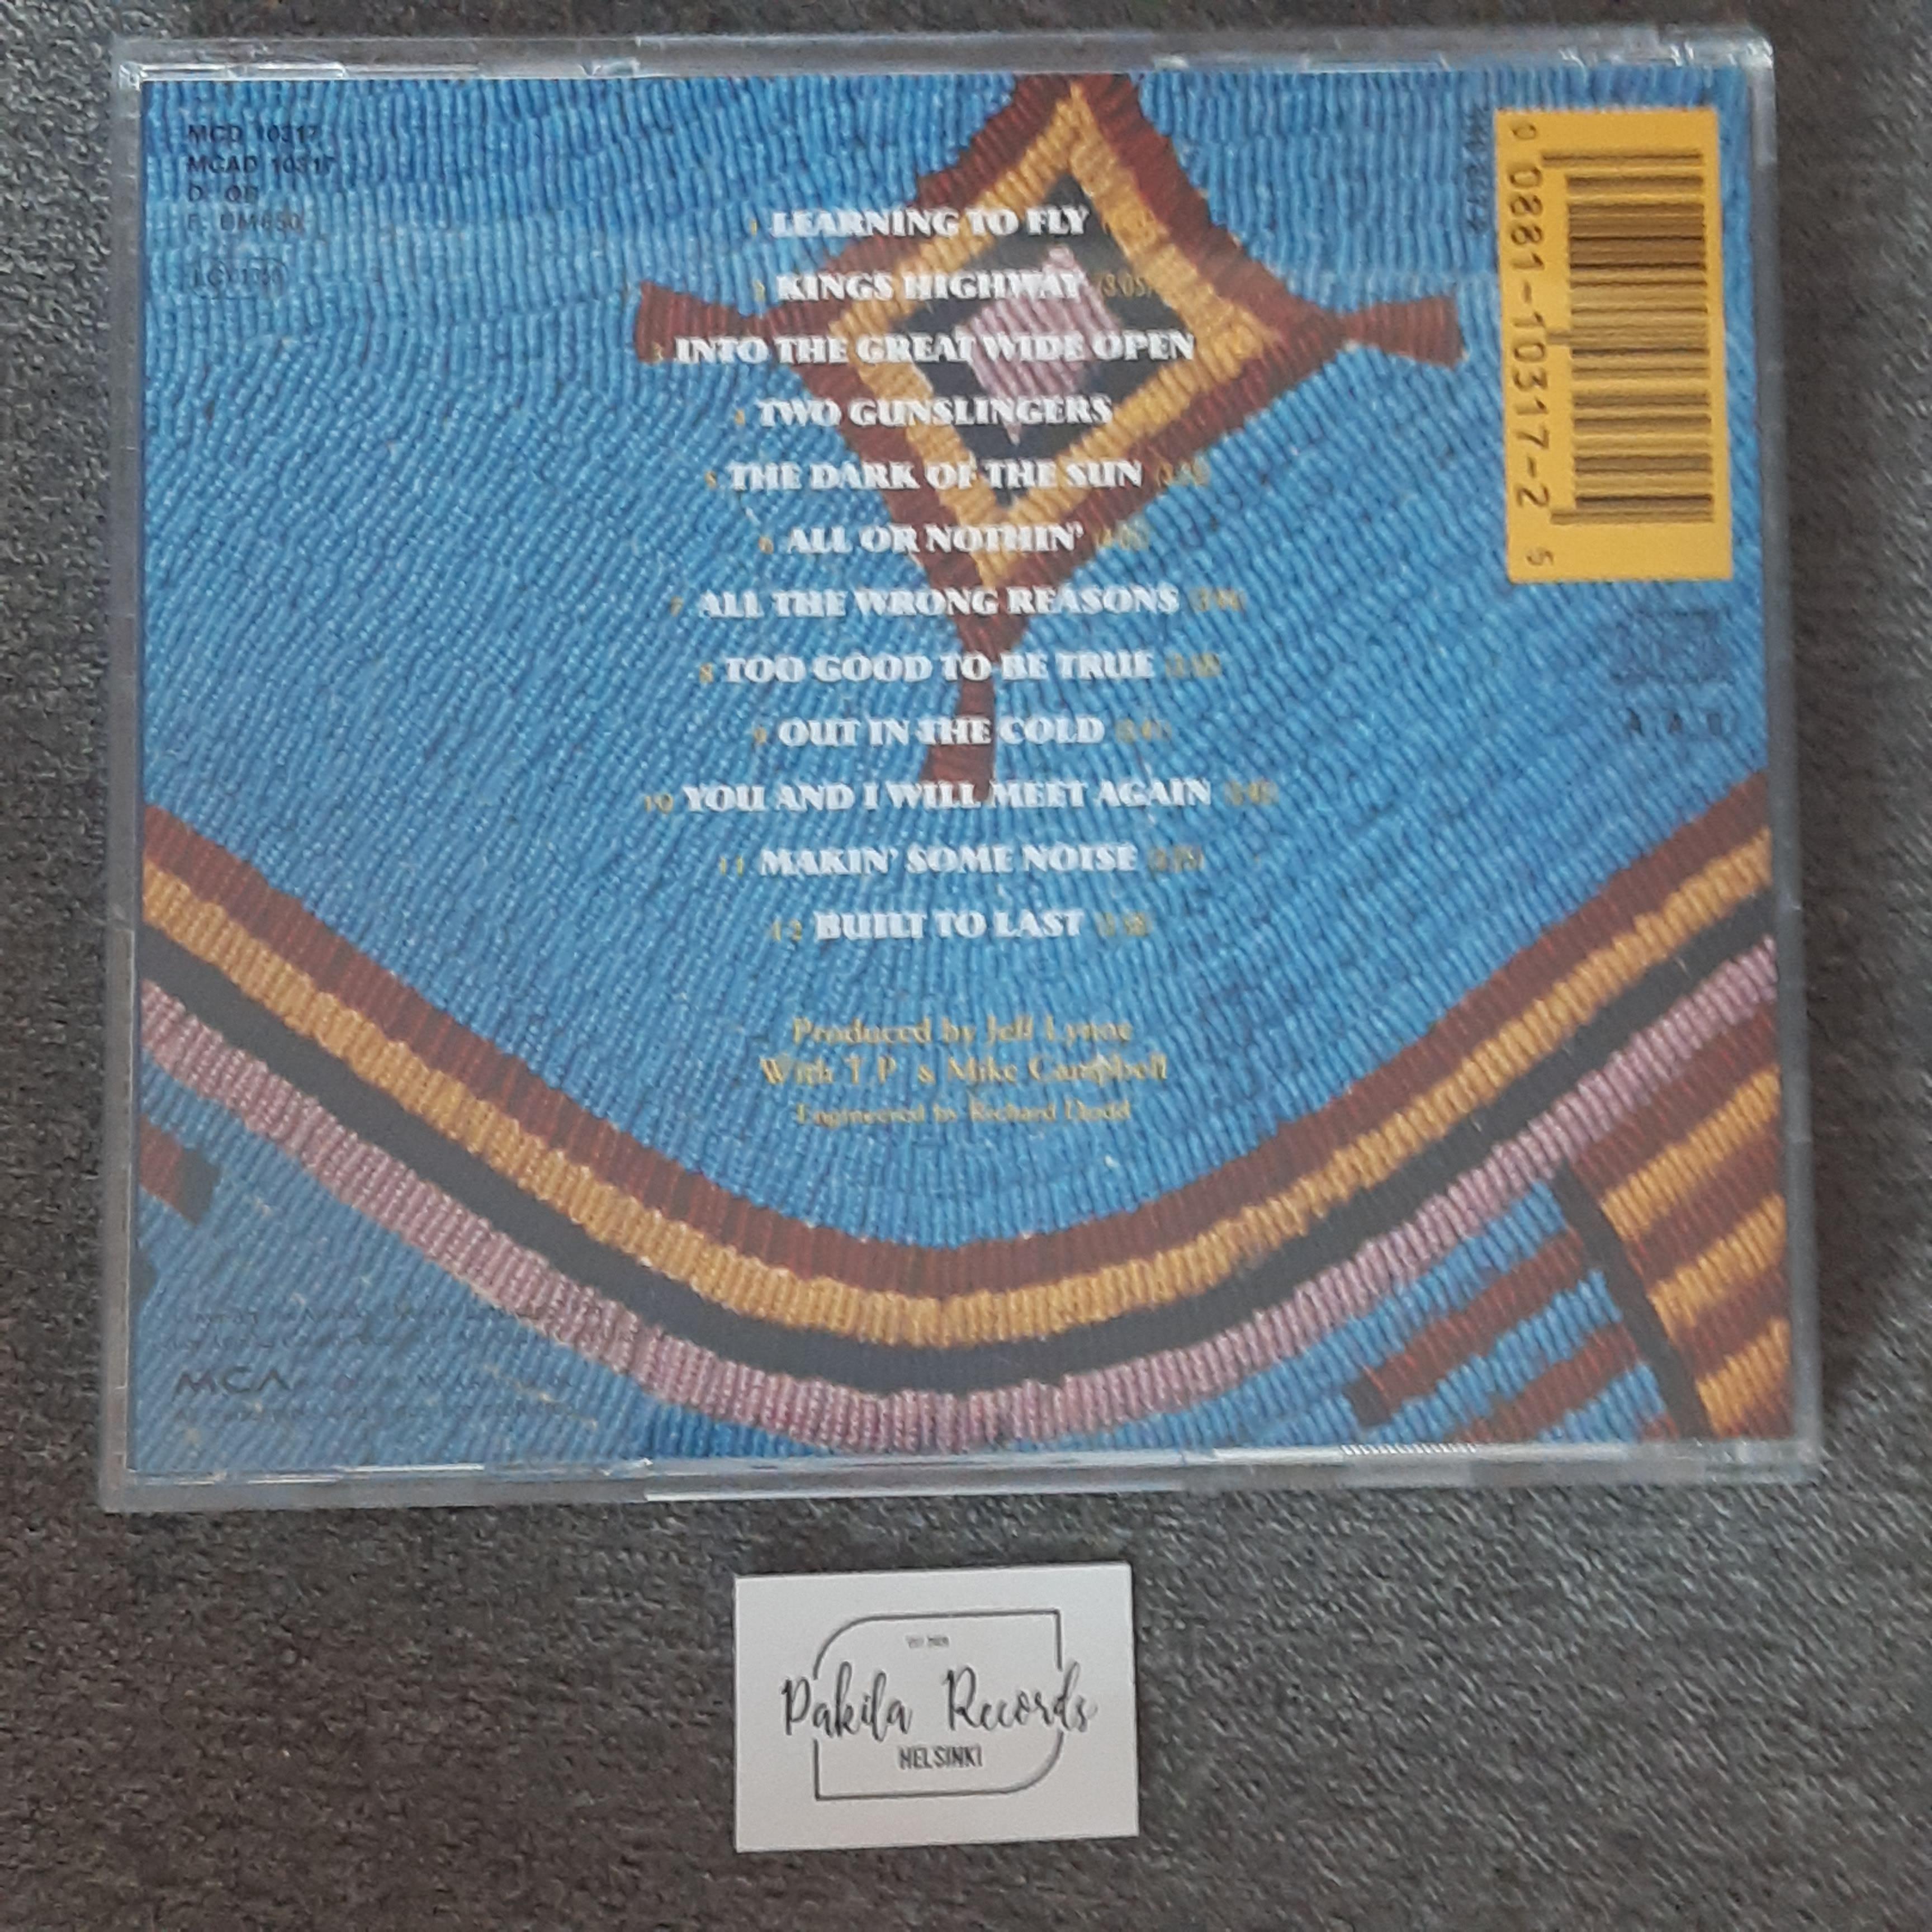 Tom Petty And The Heartbreakers - CD (käytetty)